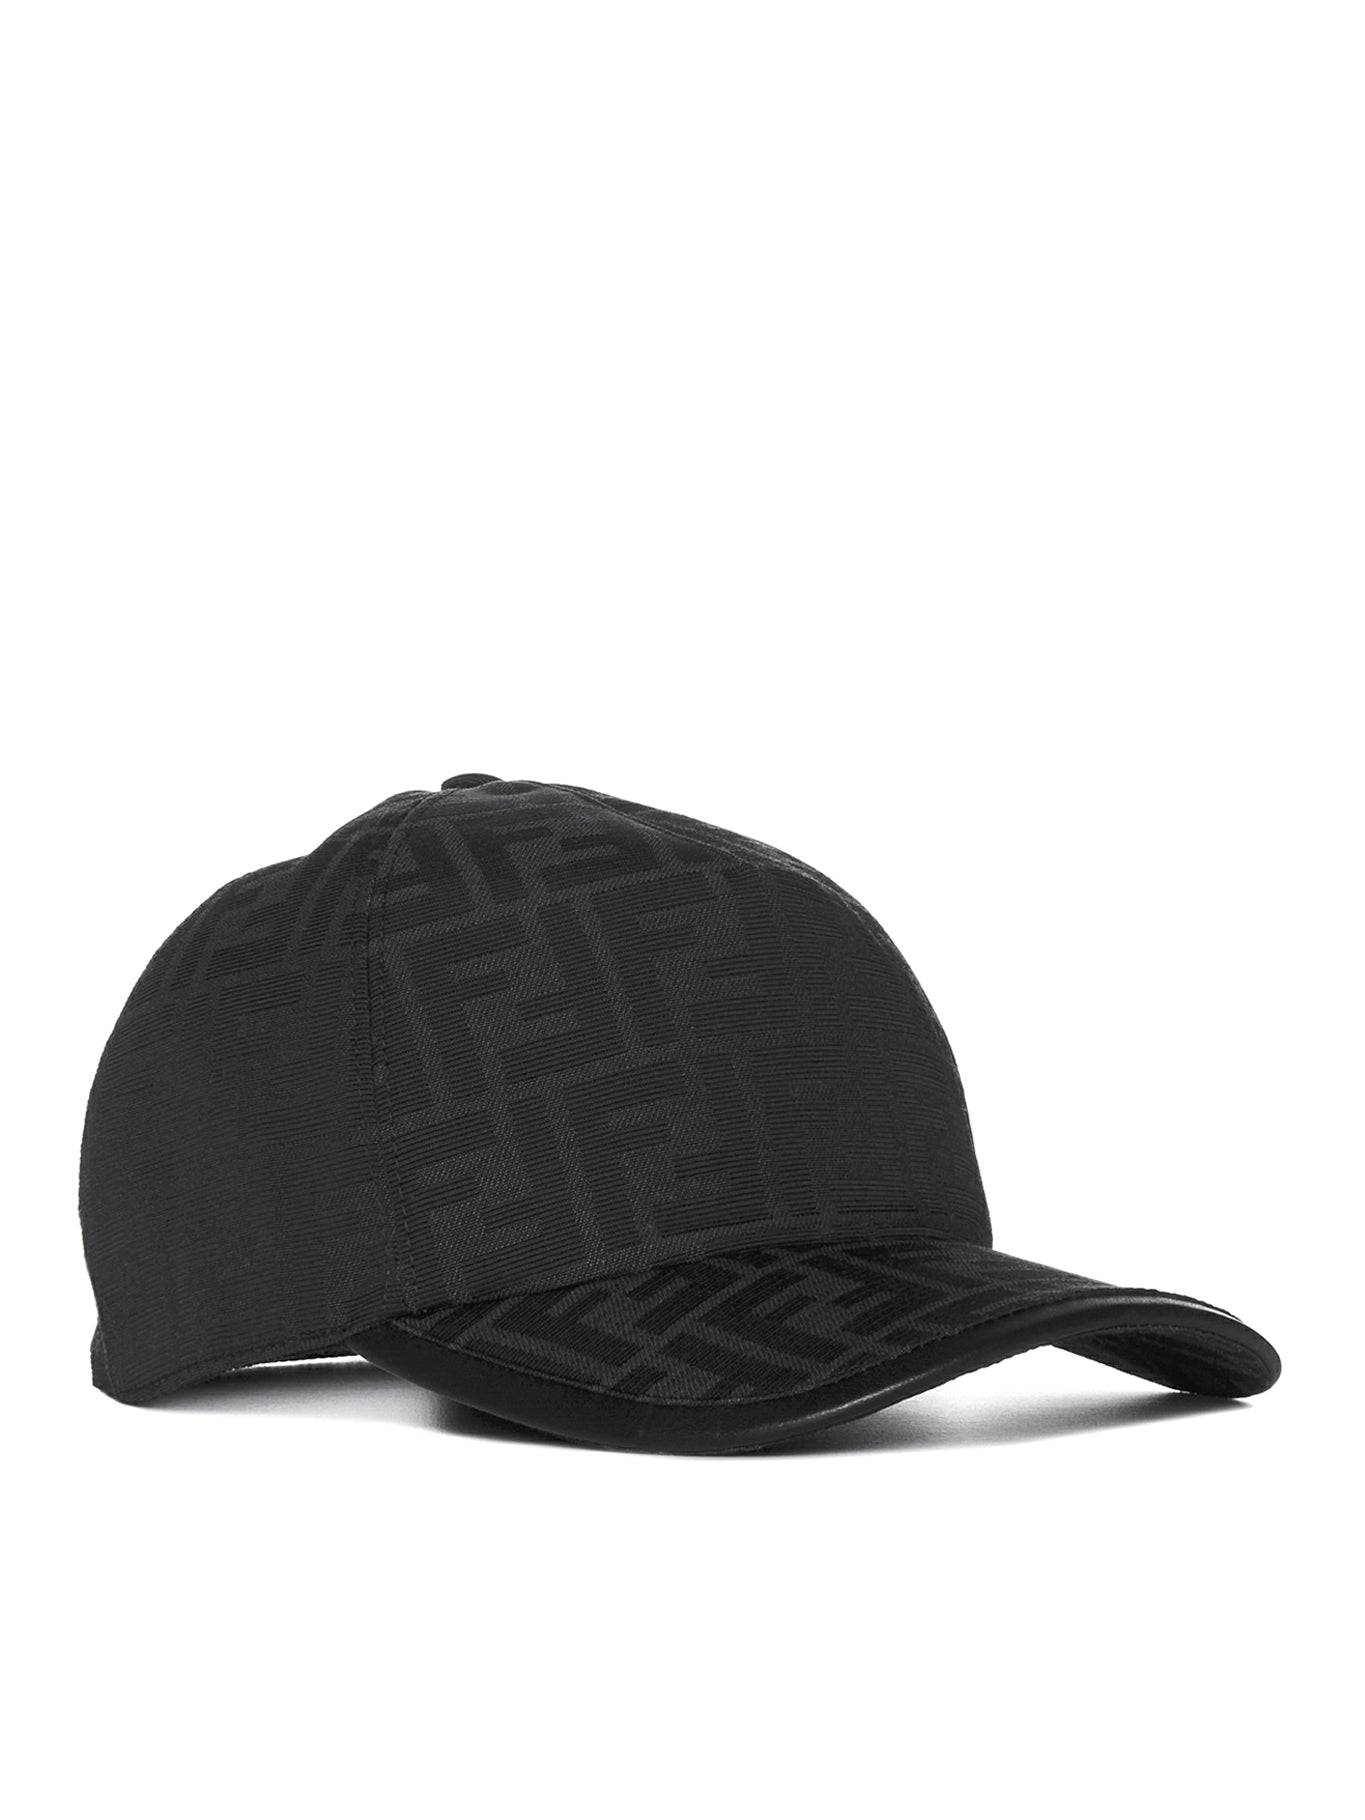 Baseball cap in black fabric